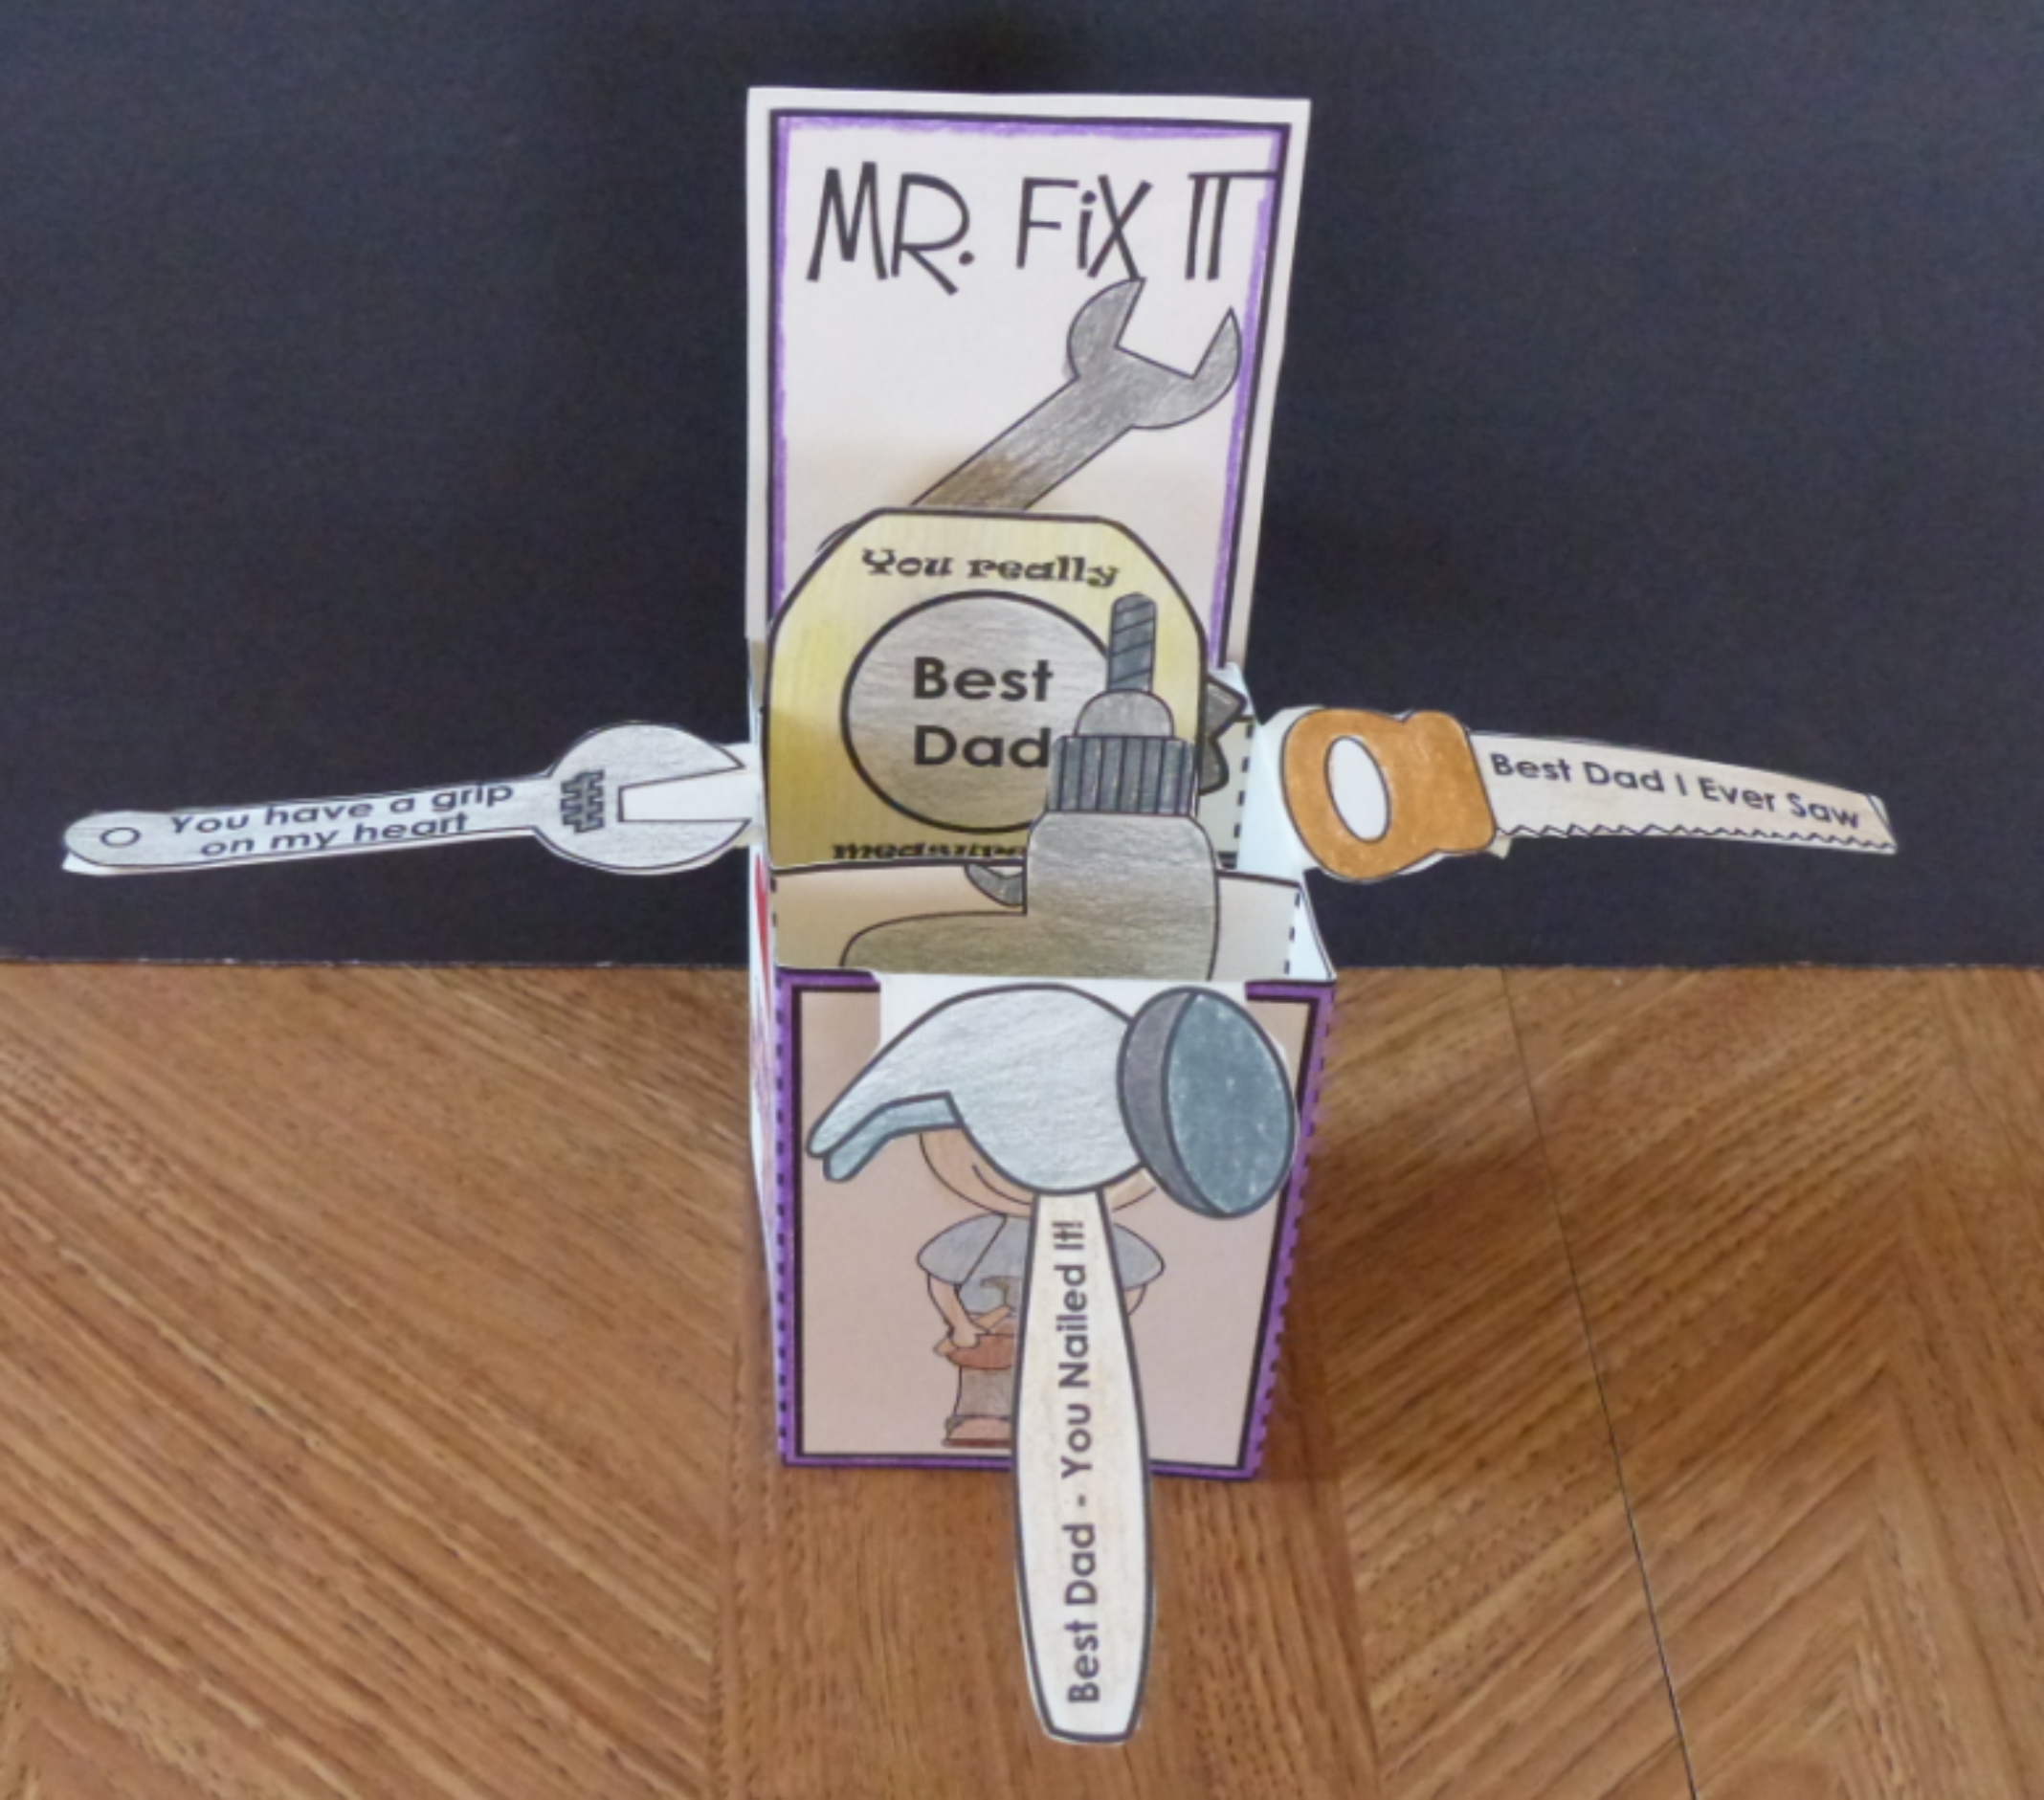 Father's Day Craft - POP-UP Mr. FIX IT Box Card